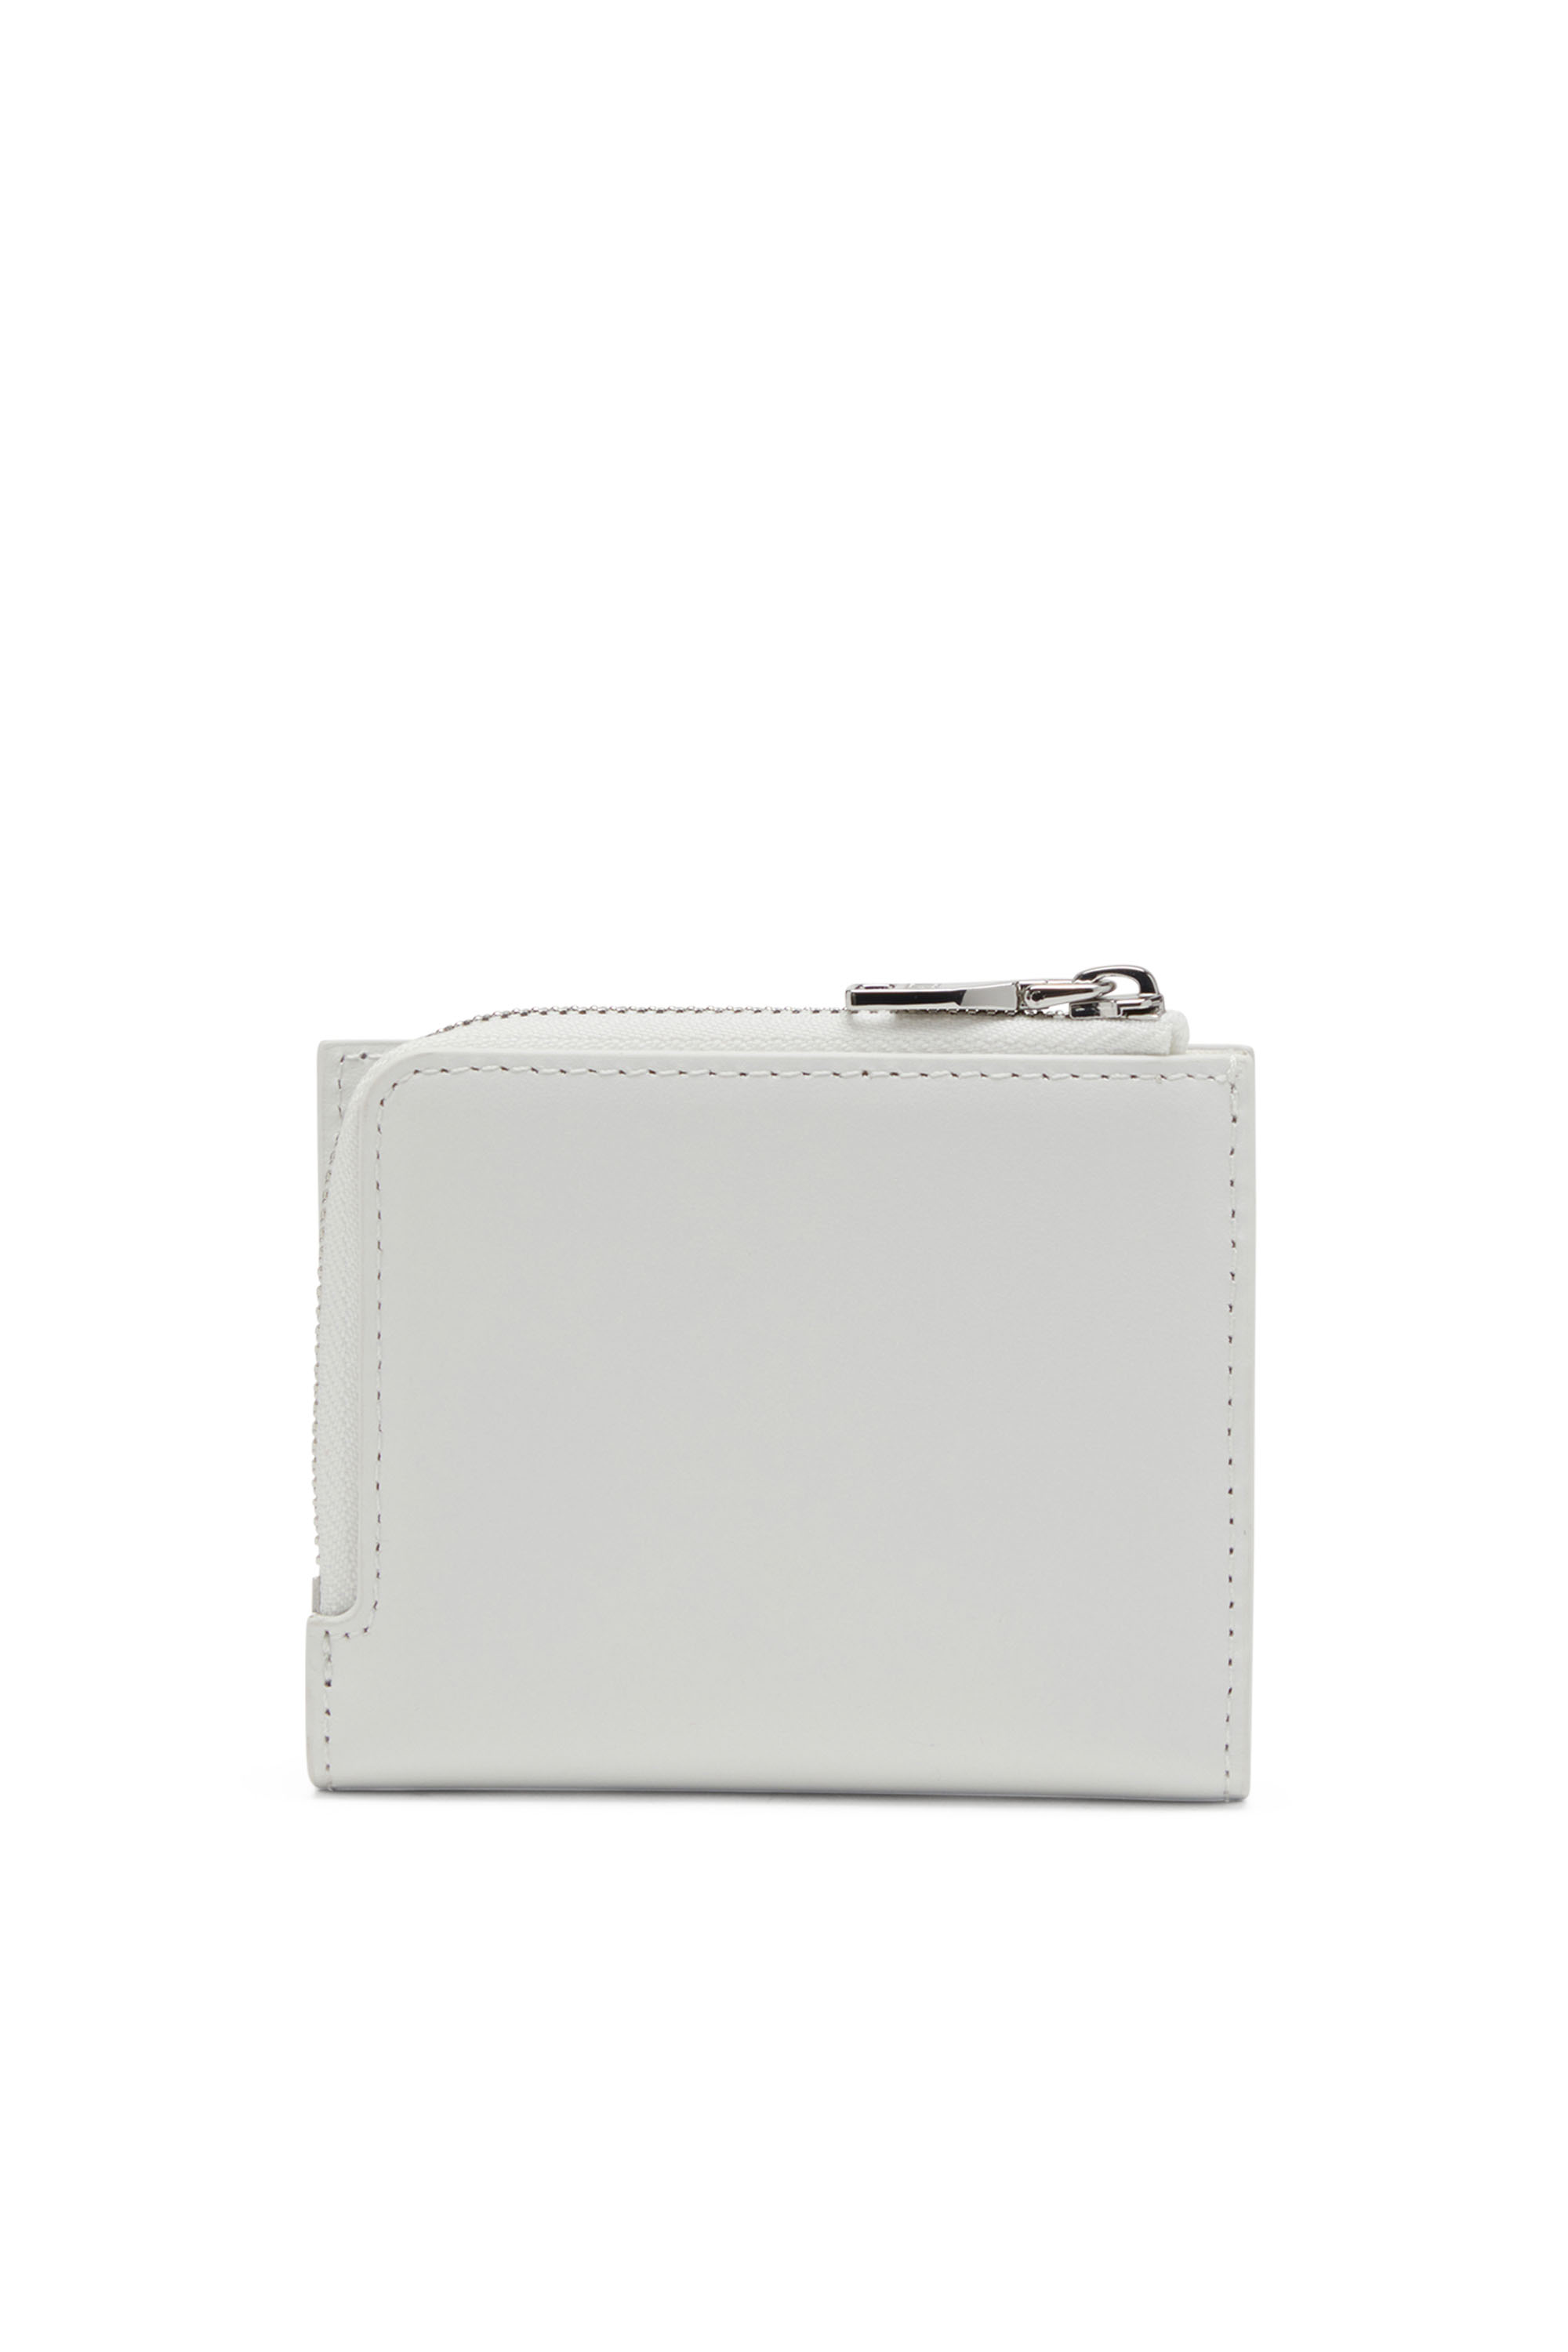 Diesel - 1DR CARD HOLDER ZIP L, Female Bi-fold card holder in nappa leather in ホワイト - Image 2